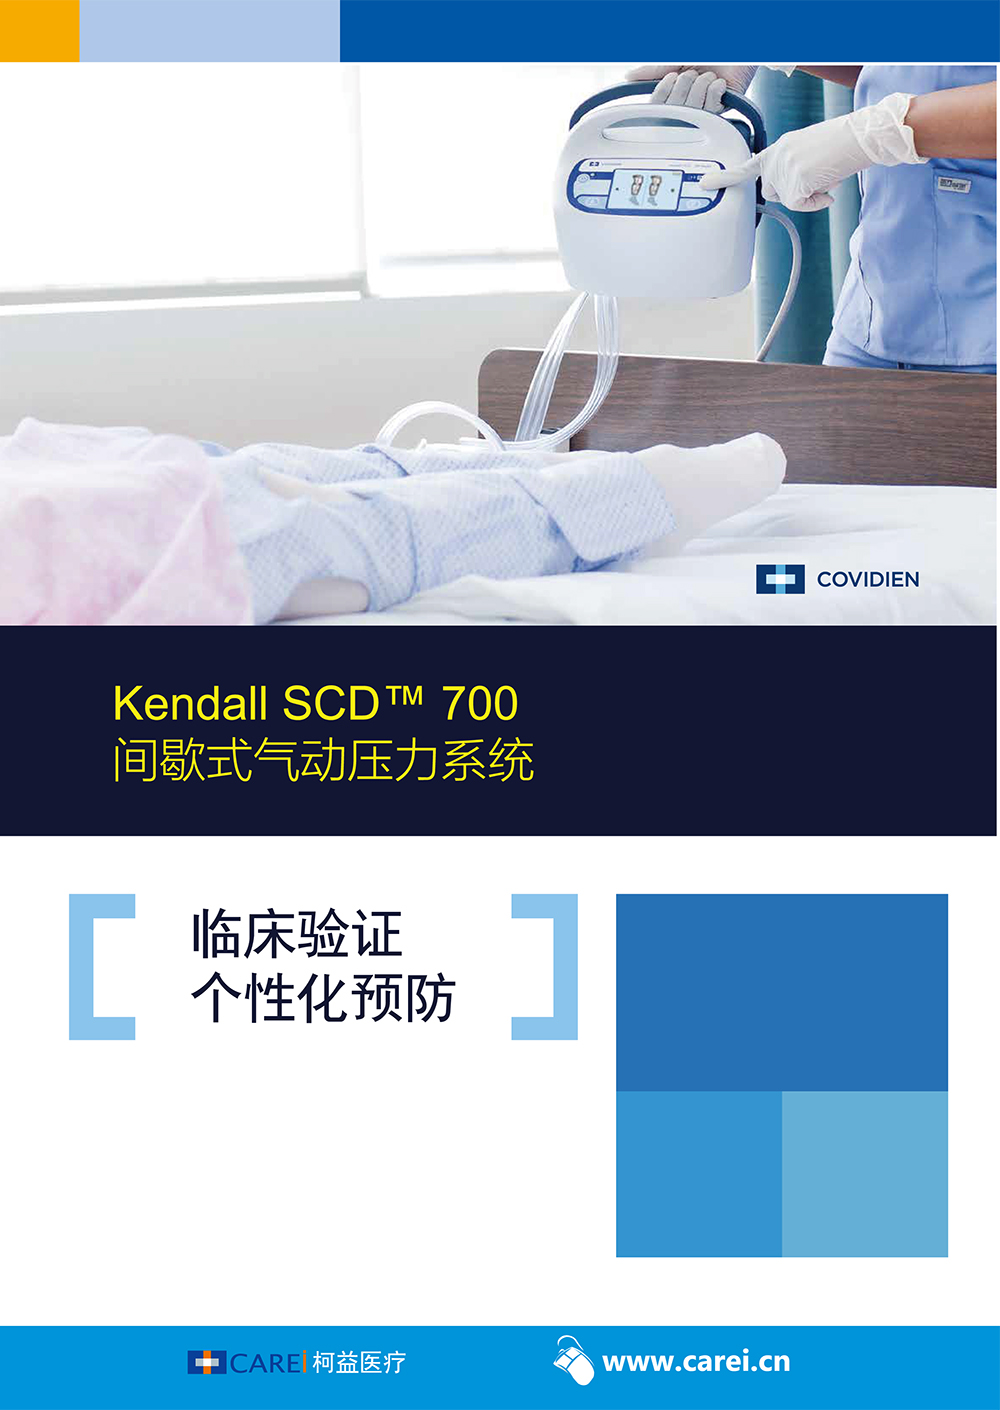 kendall-scd-700-series-controller-f1.jpg